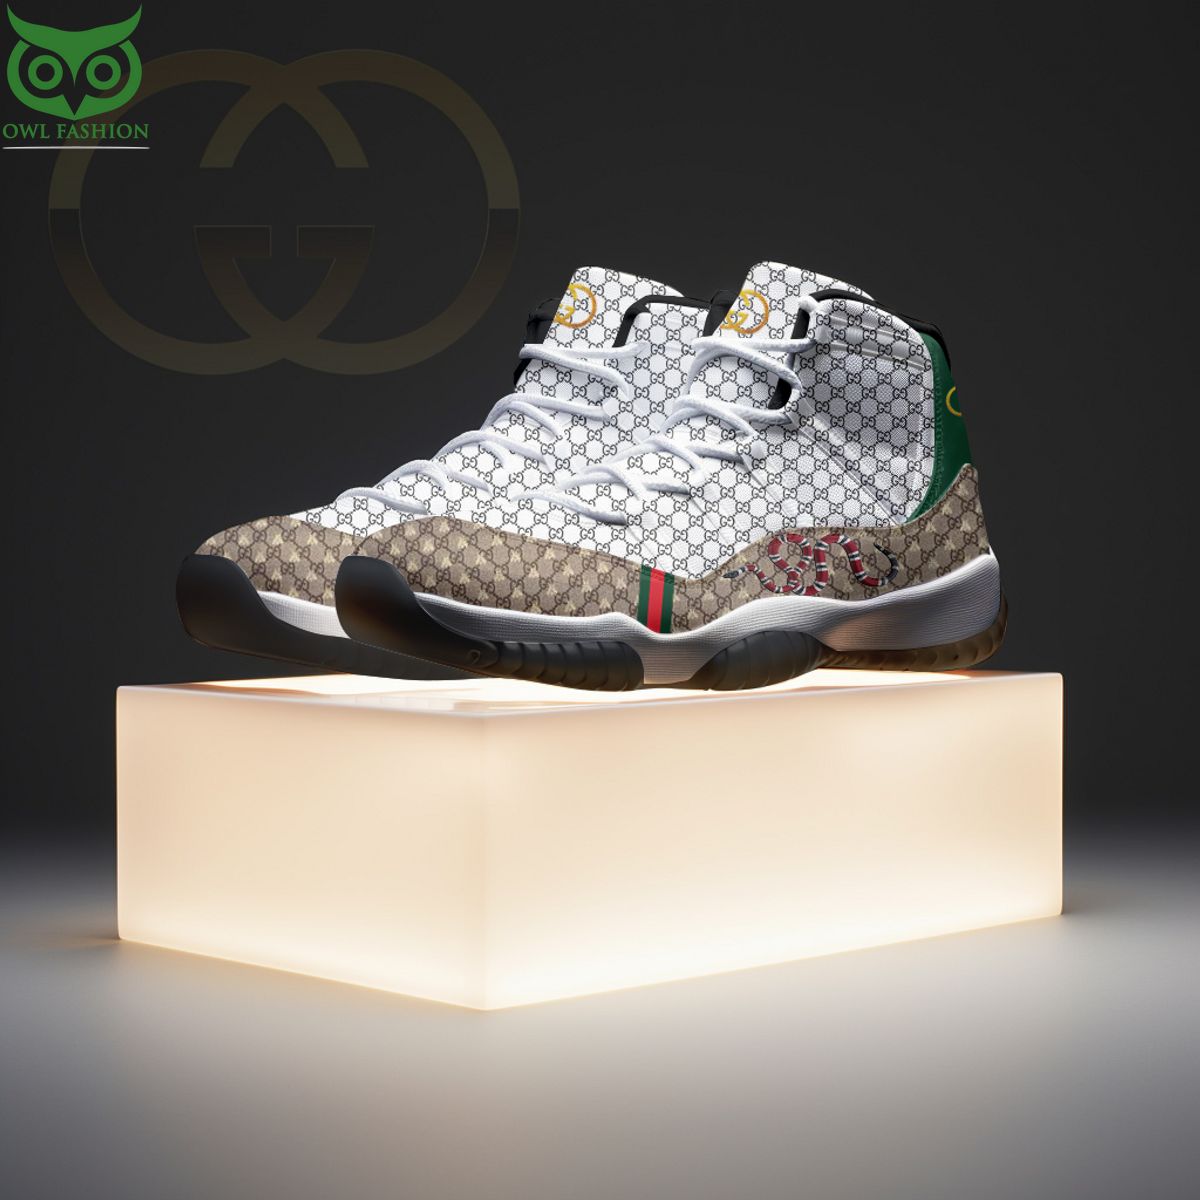 Gucci Luxury Snake Pattern Air Jordan 11 Cuteness overloaded